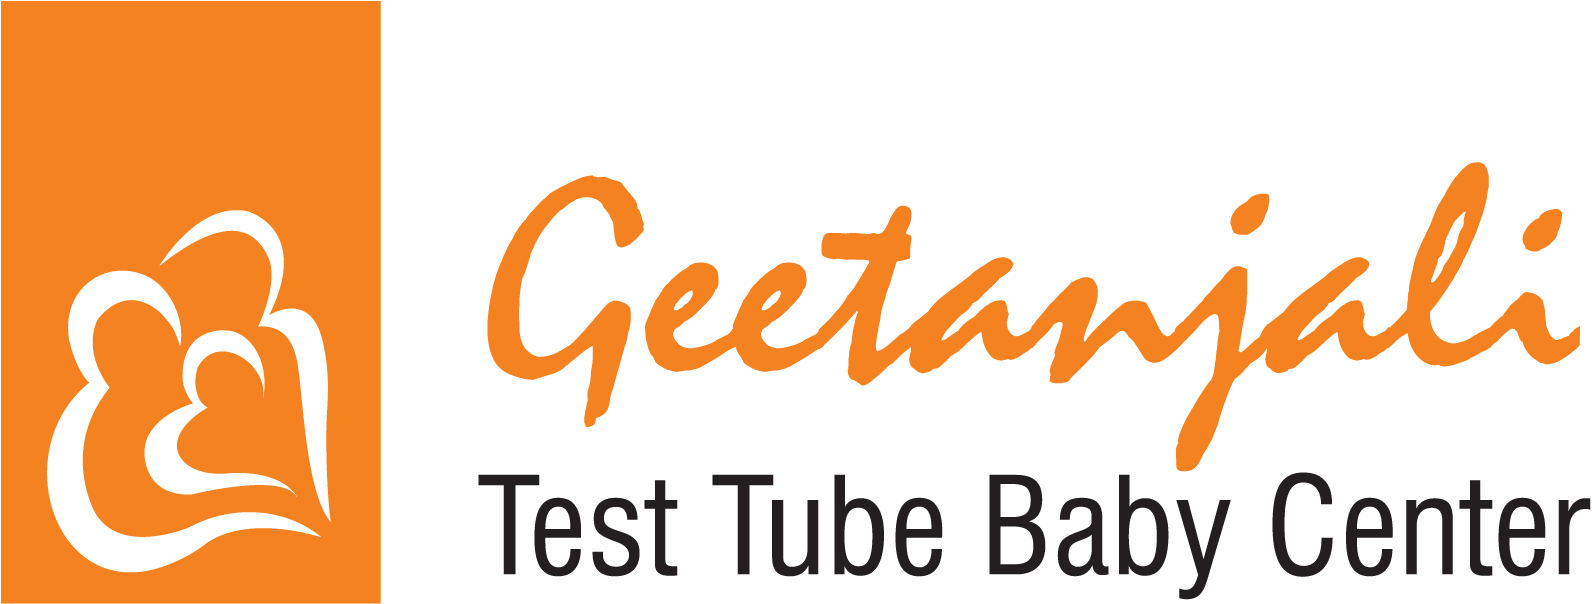 Geetanjali Test Tube Baby Centre